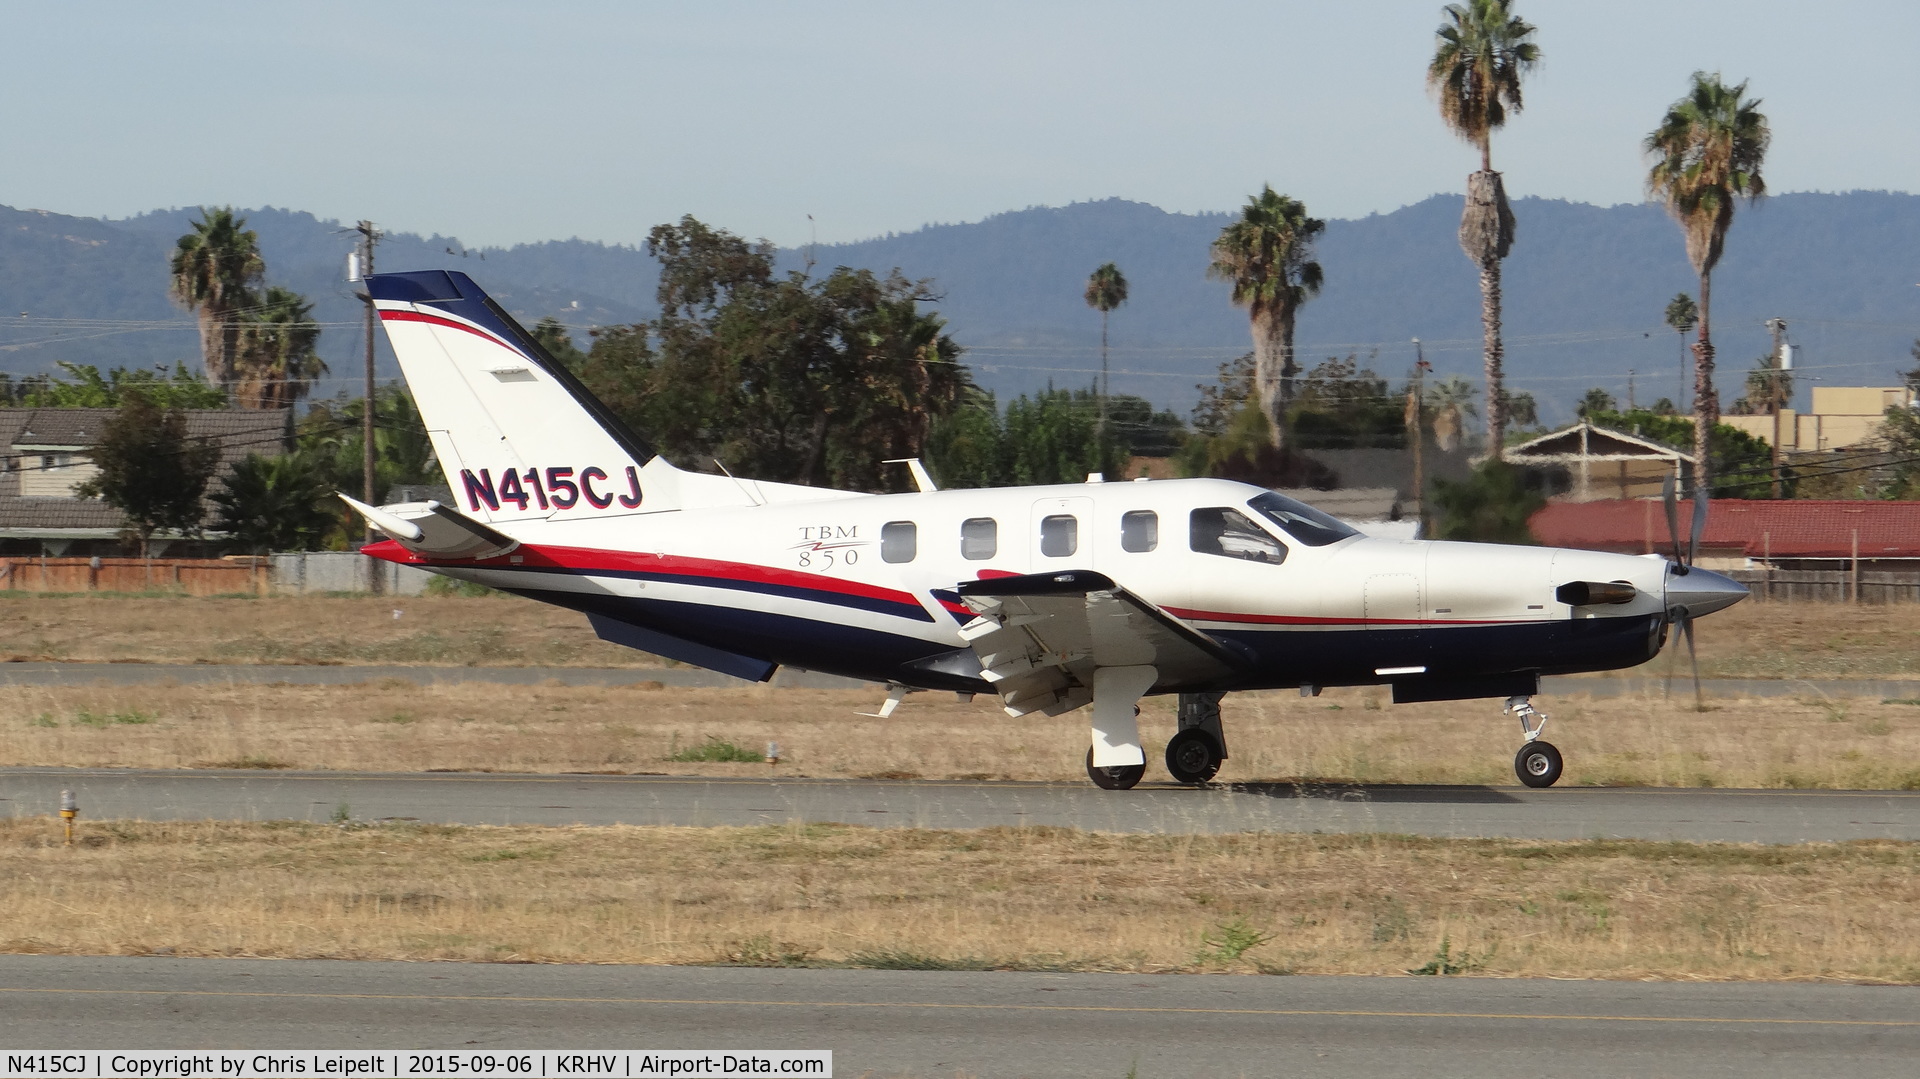 N415CJ, 2007 Socata TBM-700 C/N 415, Stratos Partners LLC (Los Gatos, CA) Socata TBM-850 landing runway 31R at Reid Hillview Airport, San Jose, CA.